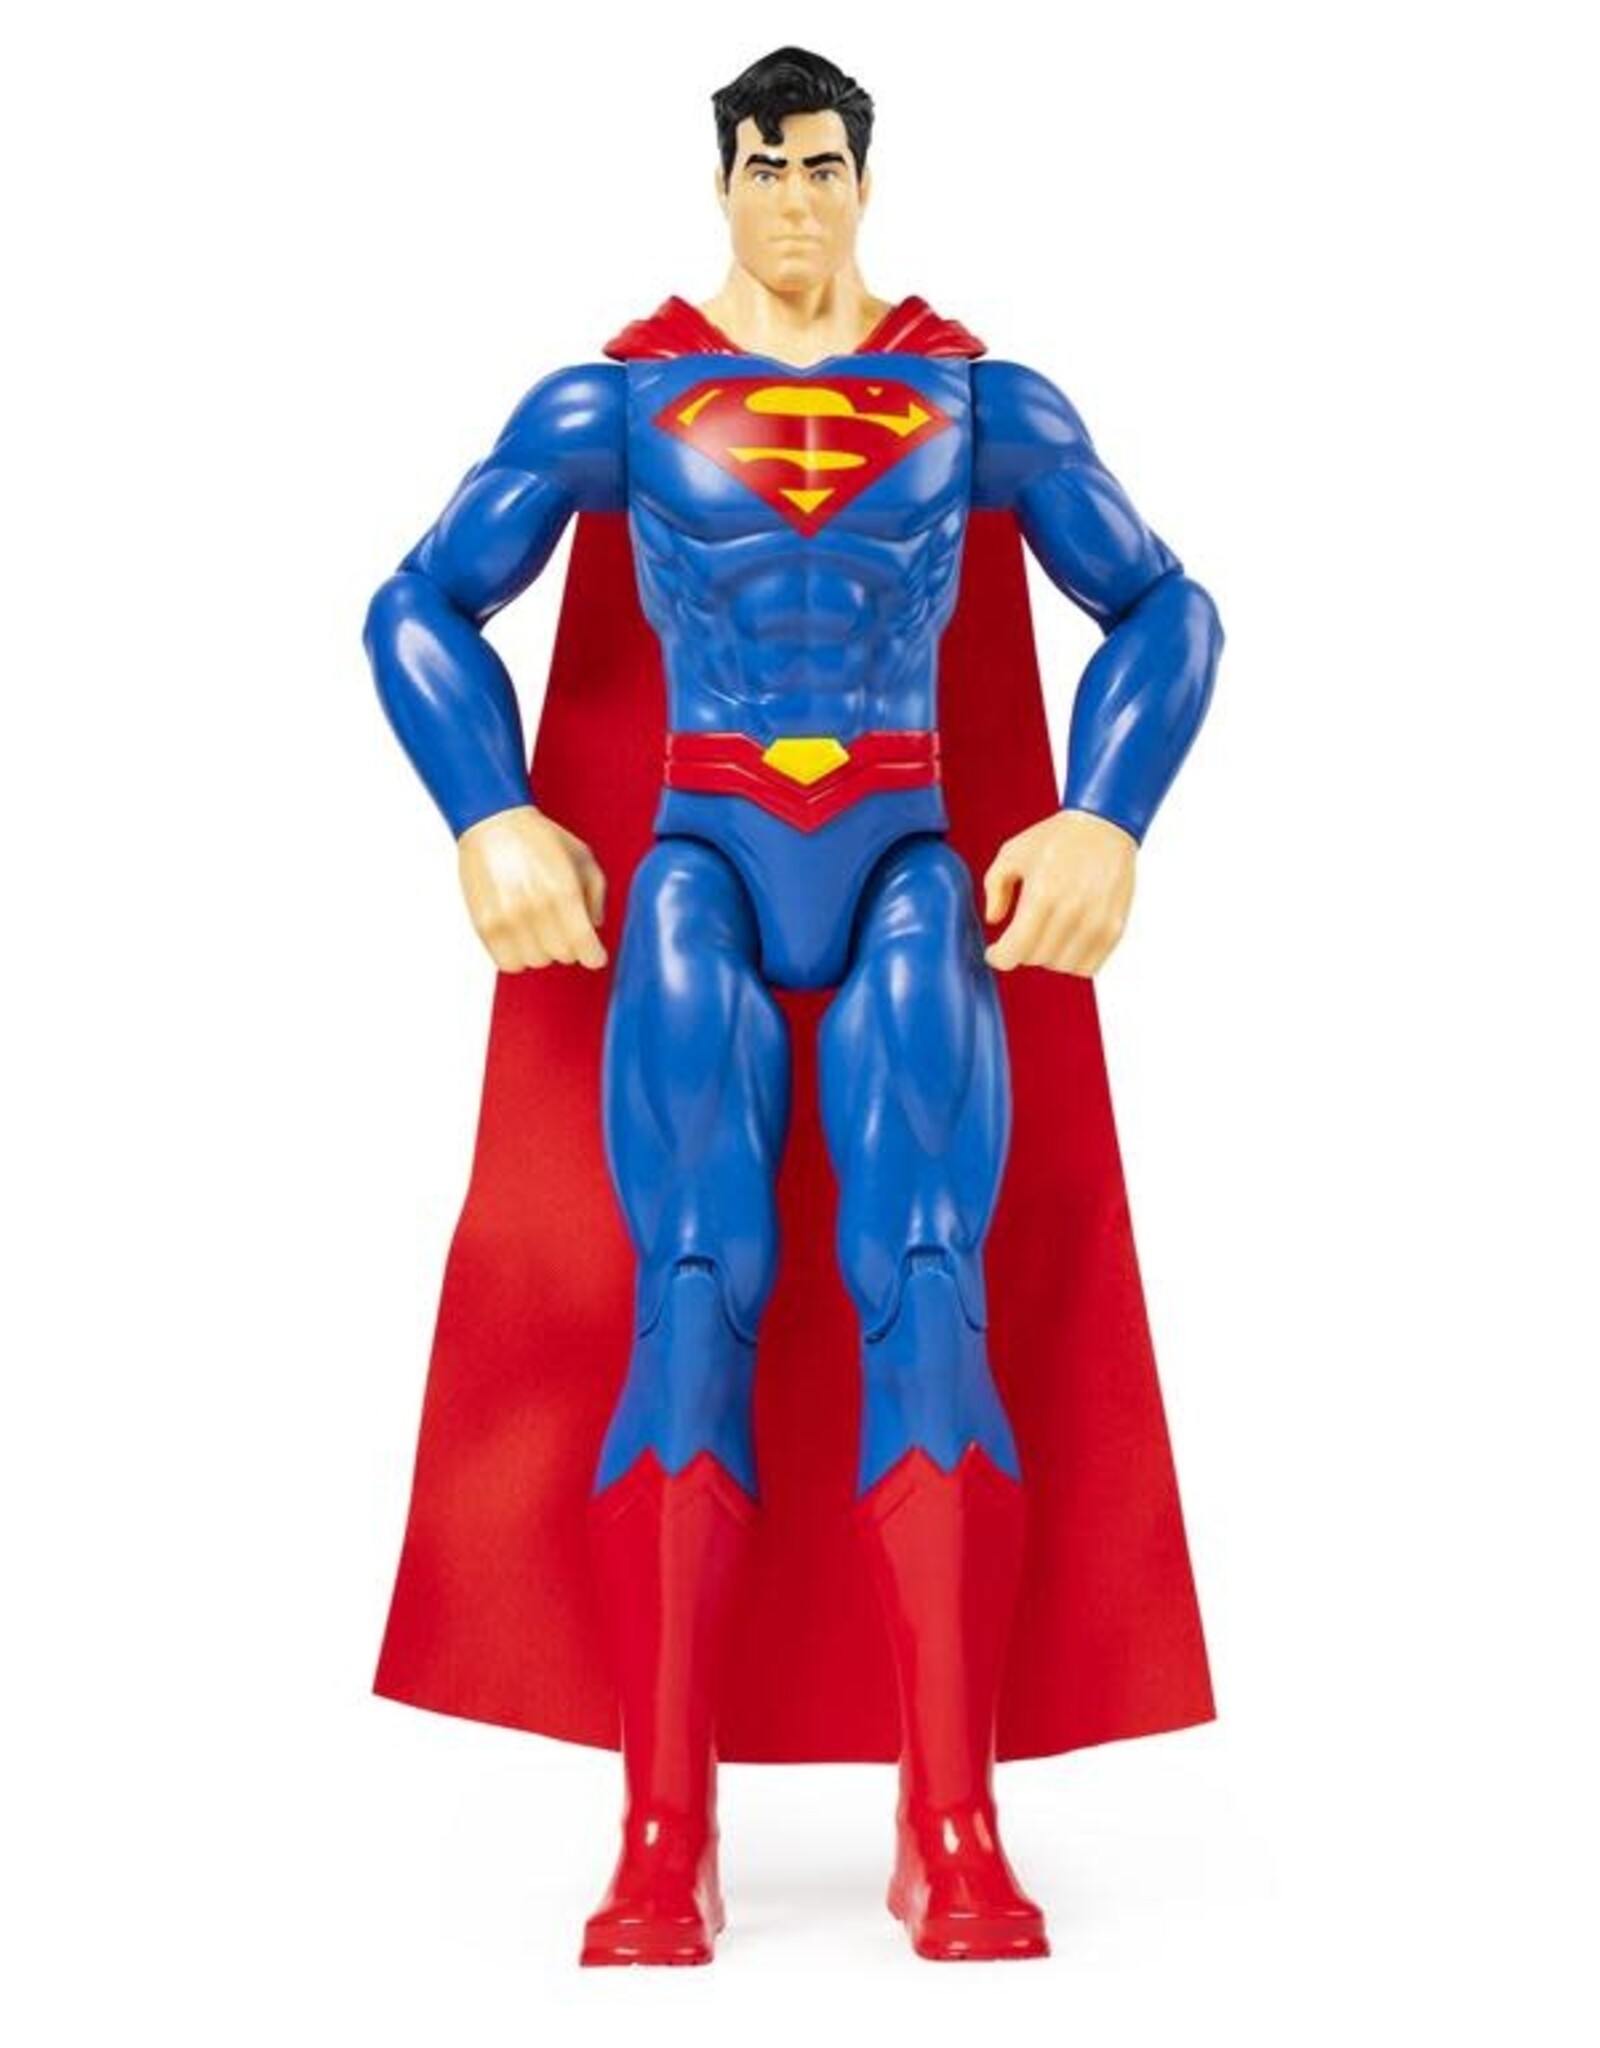 Gund/Spinmaster DC Comics 12-Inch Superman Action Figure